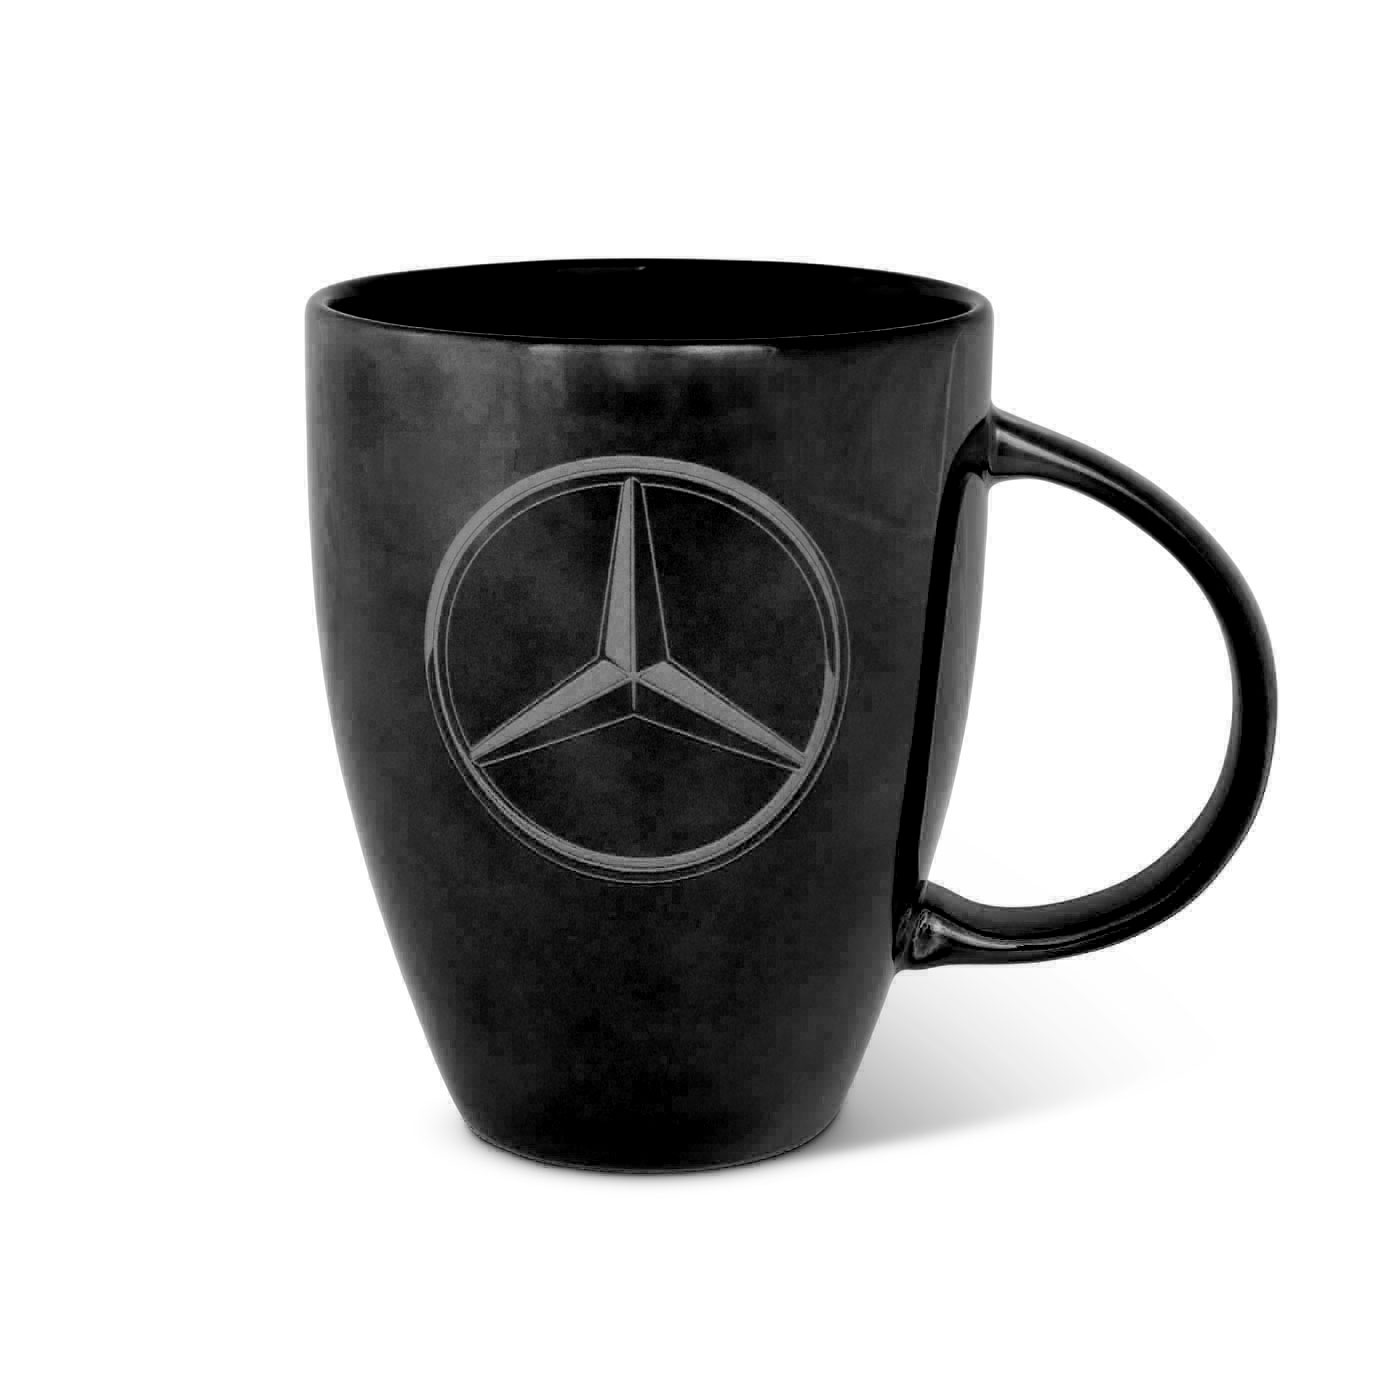 18oz Bistro Mug  Mercedes-Benz Lifestyle Collection